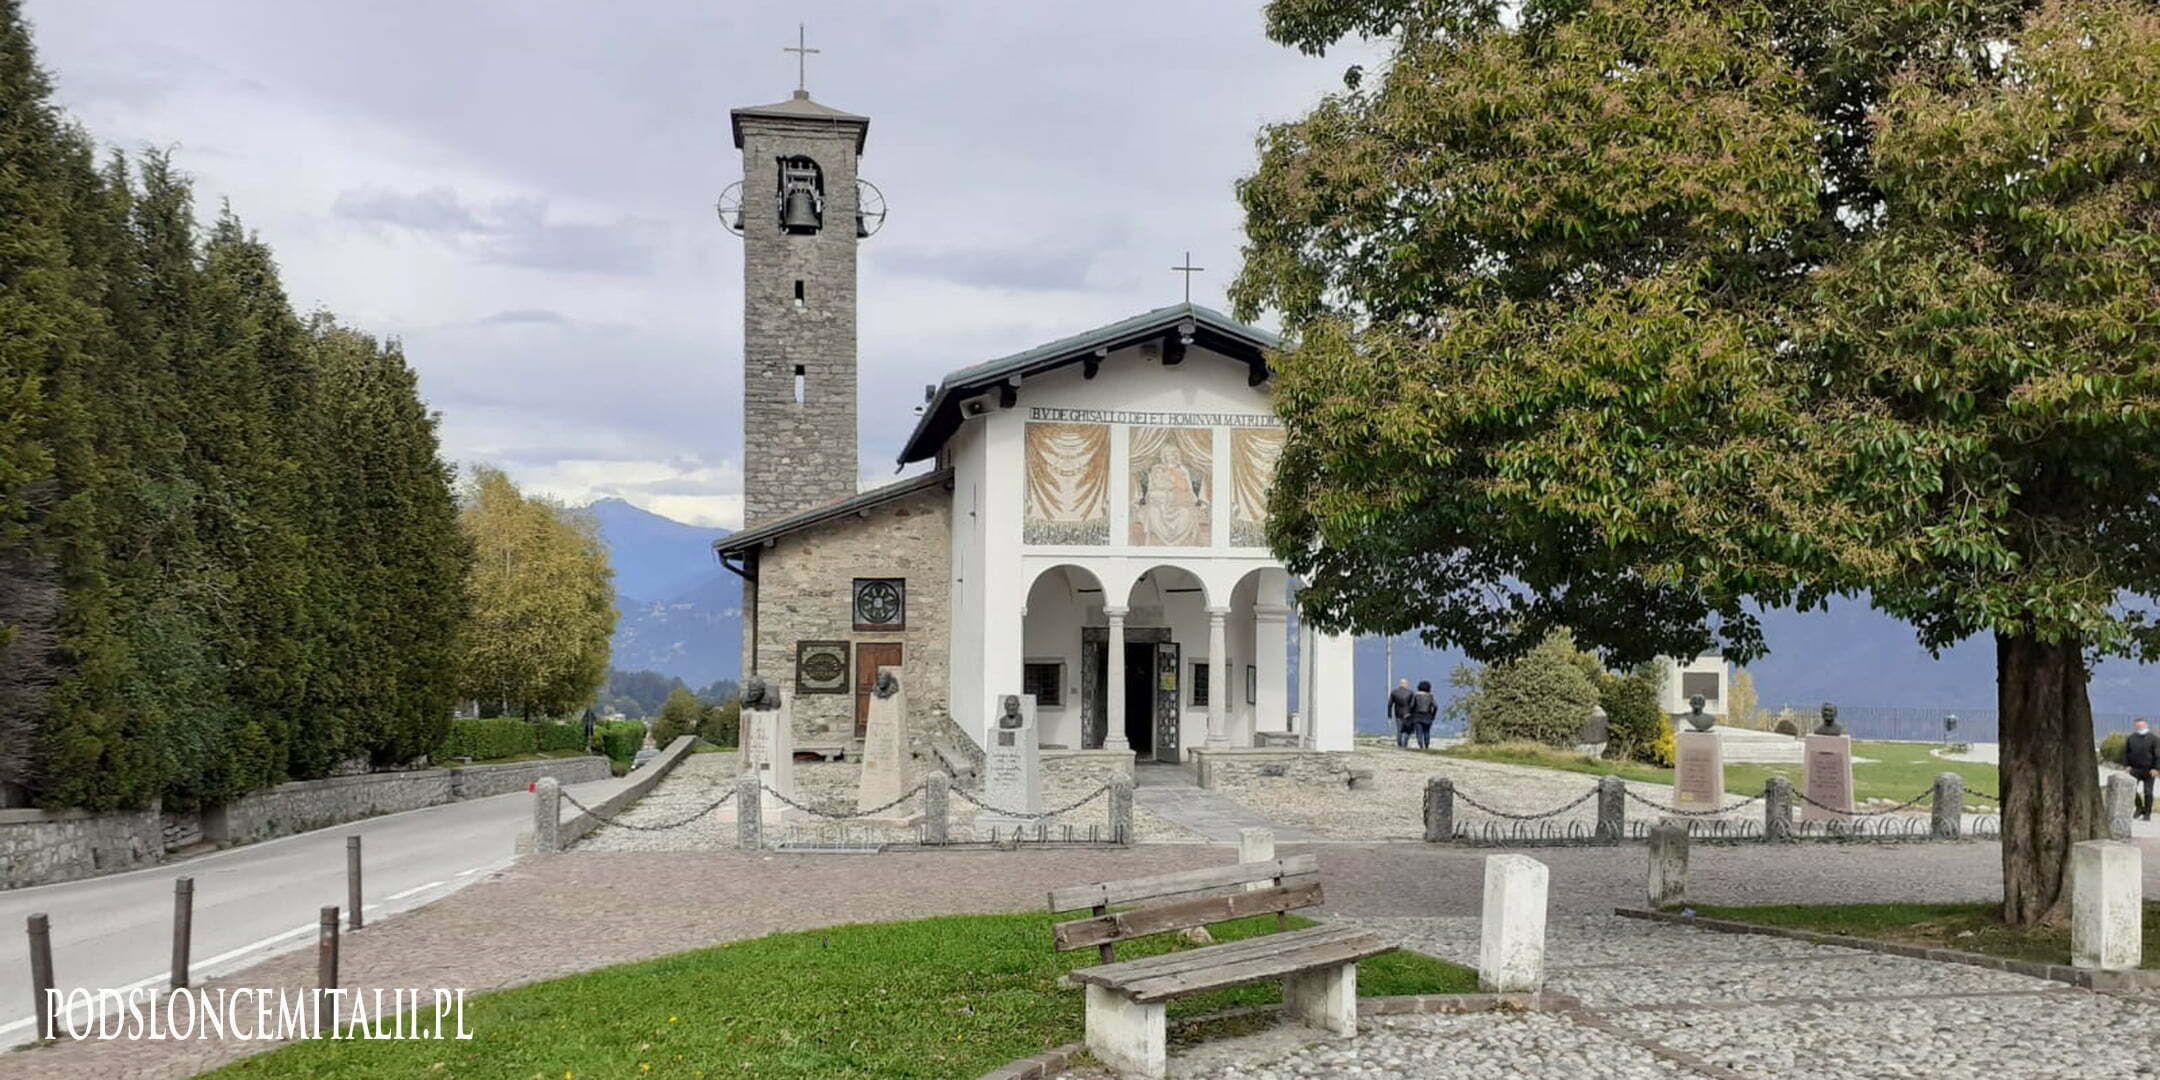 Sanktuarium Madonna del Ghisallo to kościół patronki kolarzy